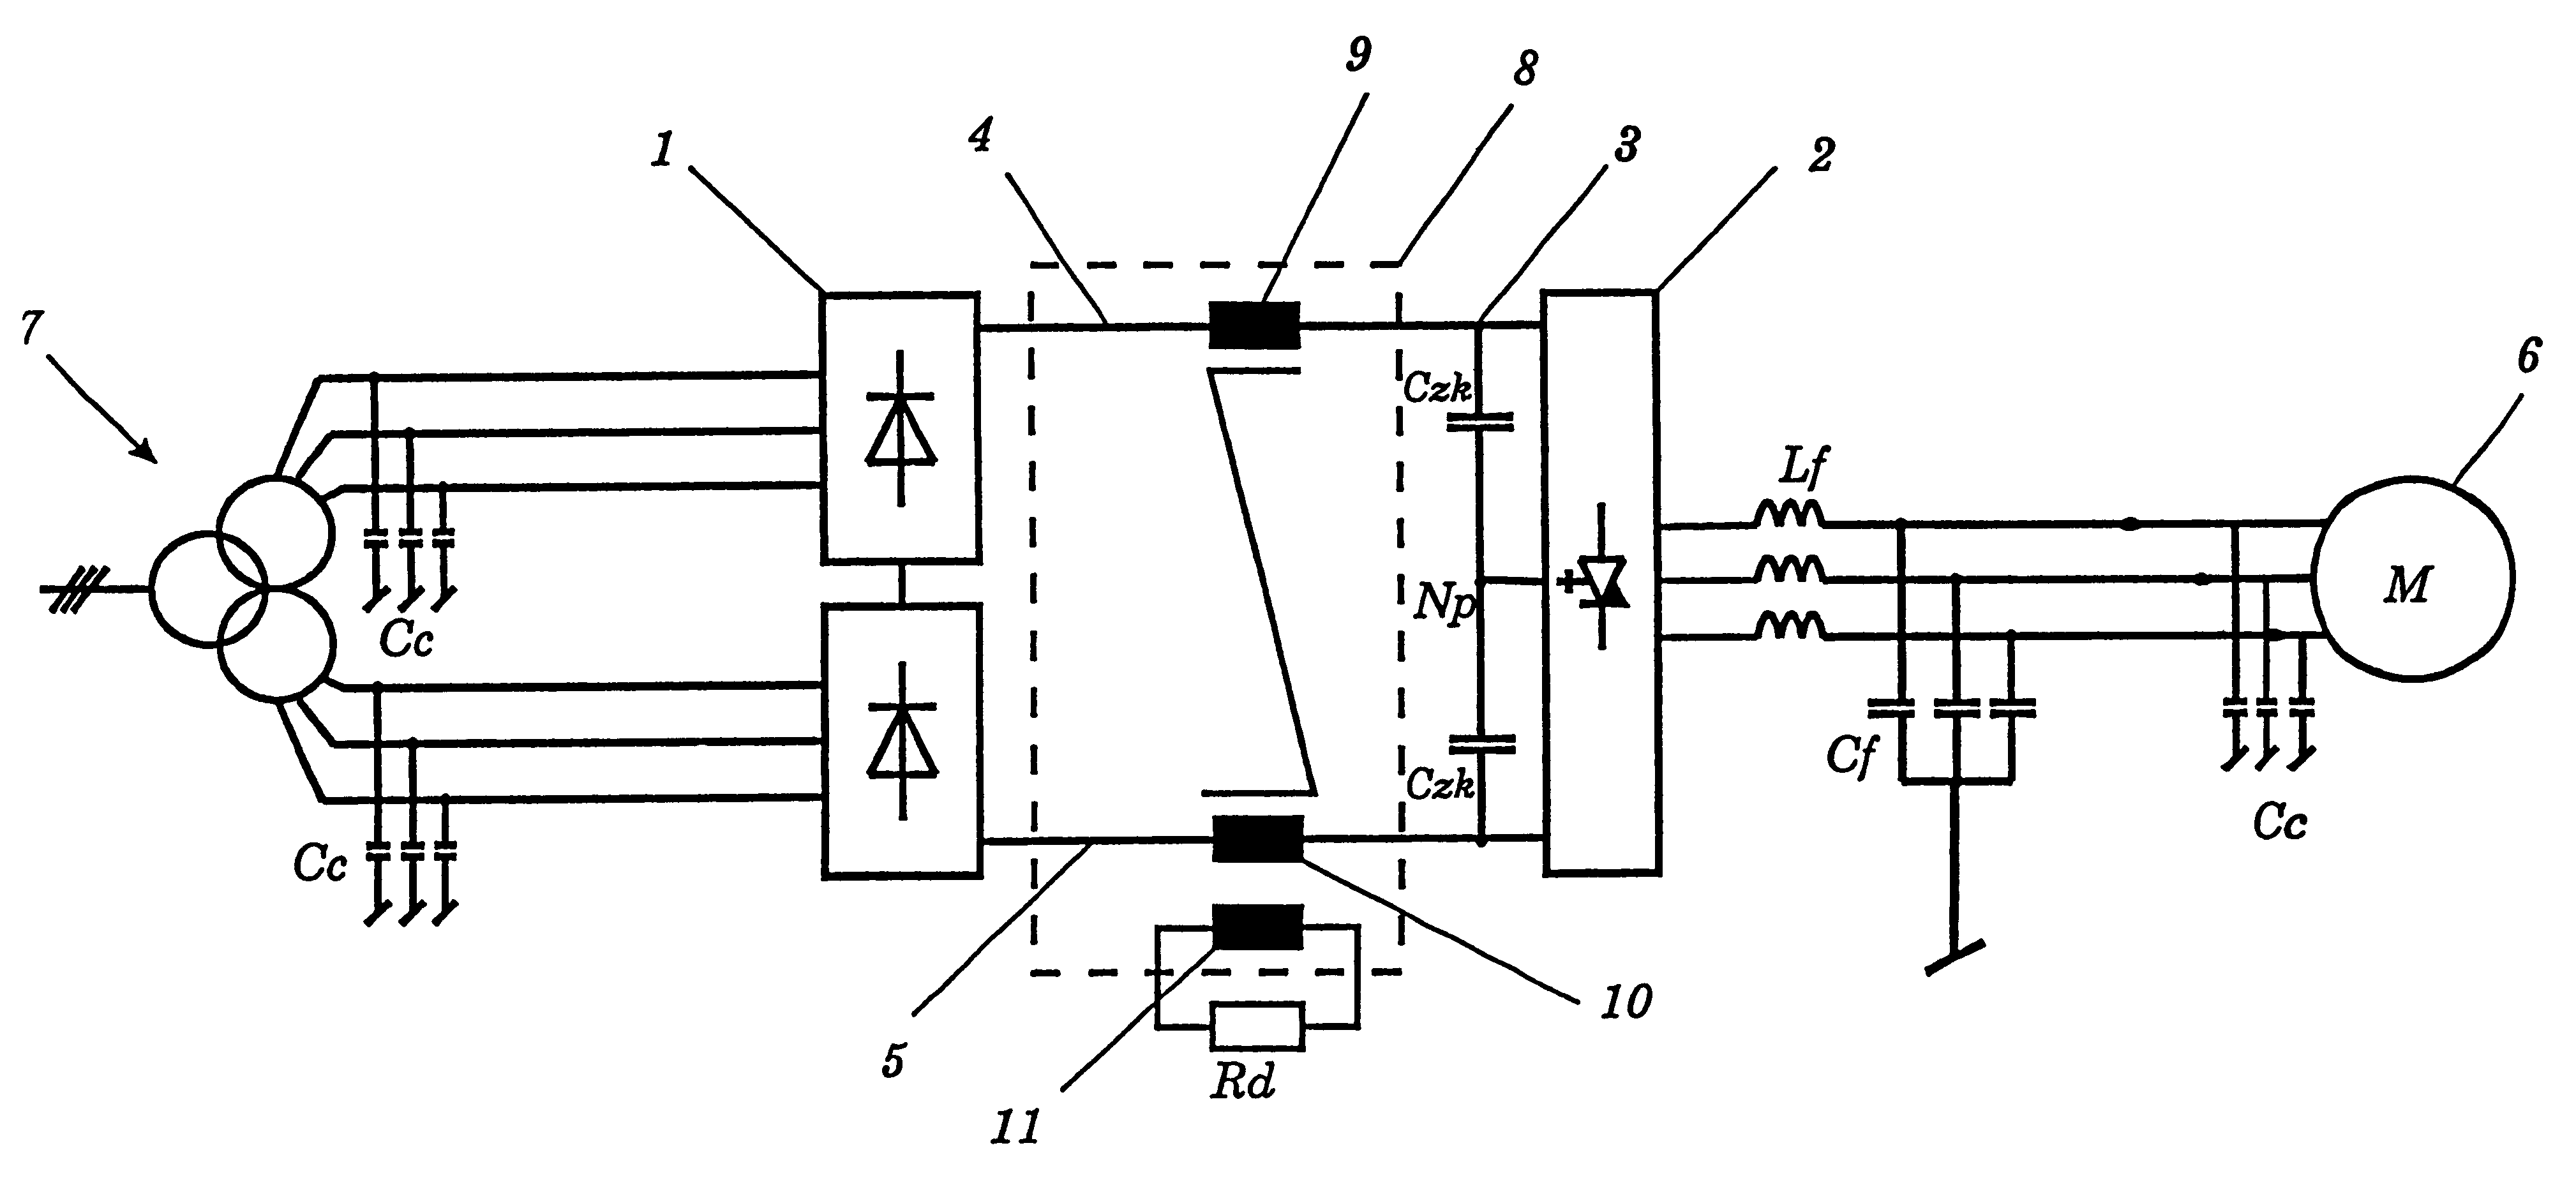 Converter circuit arrangement having a DC intermediate circuit